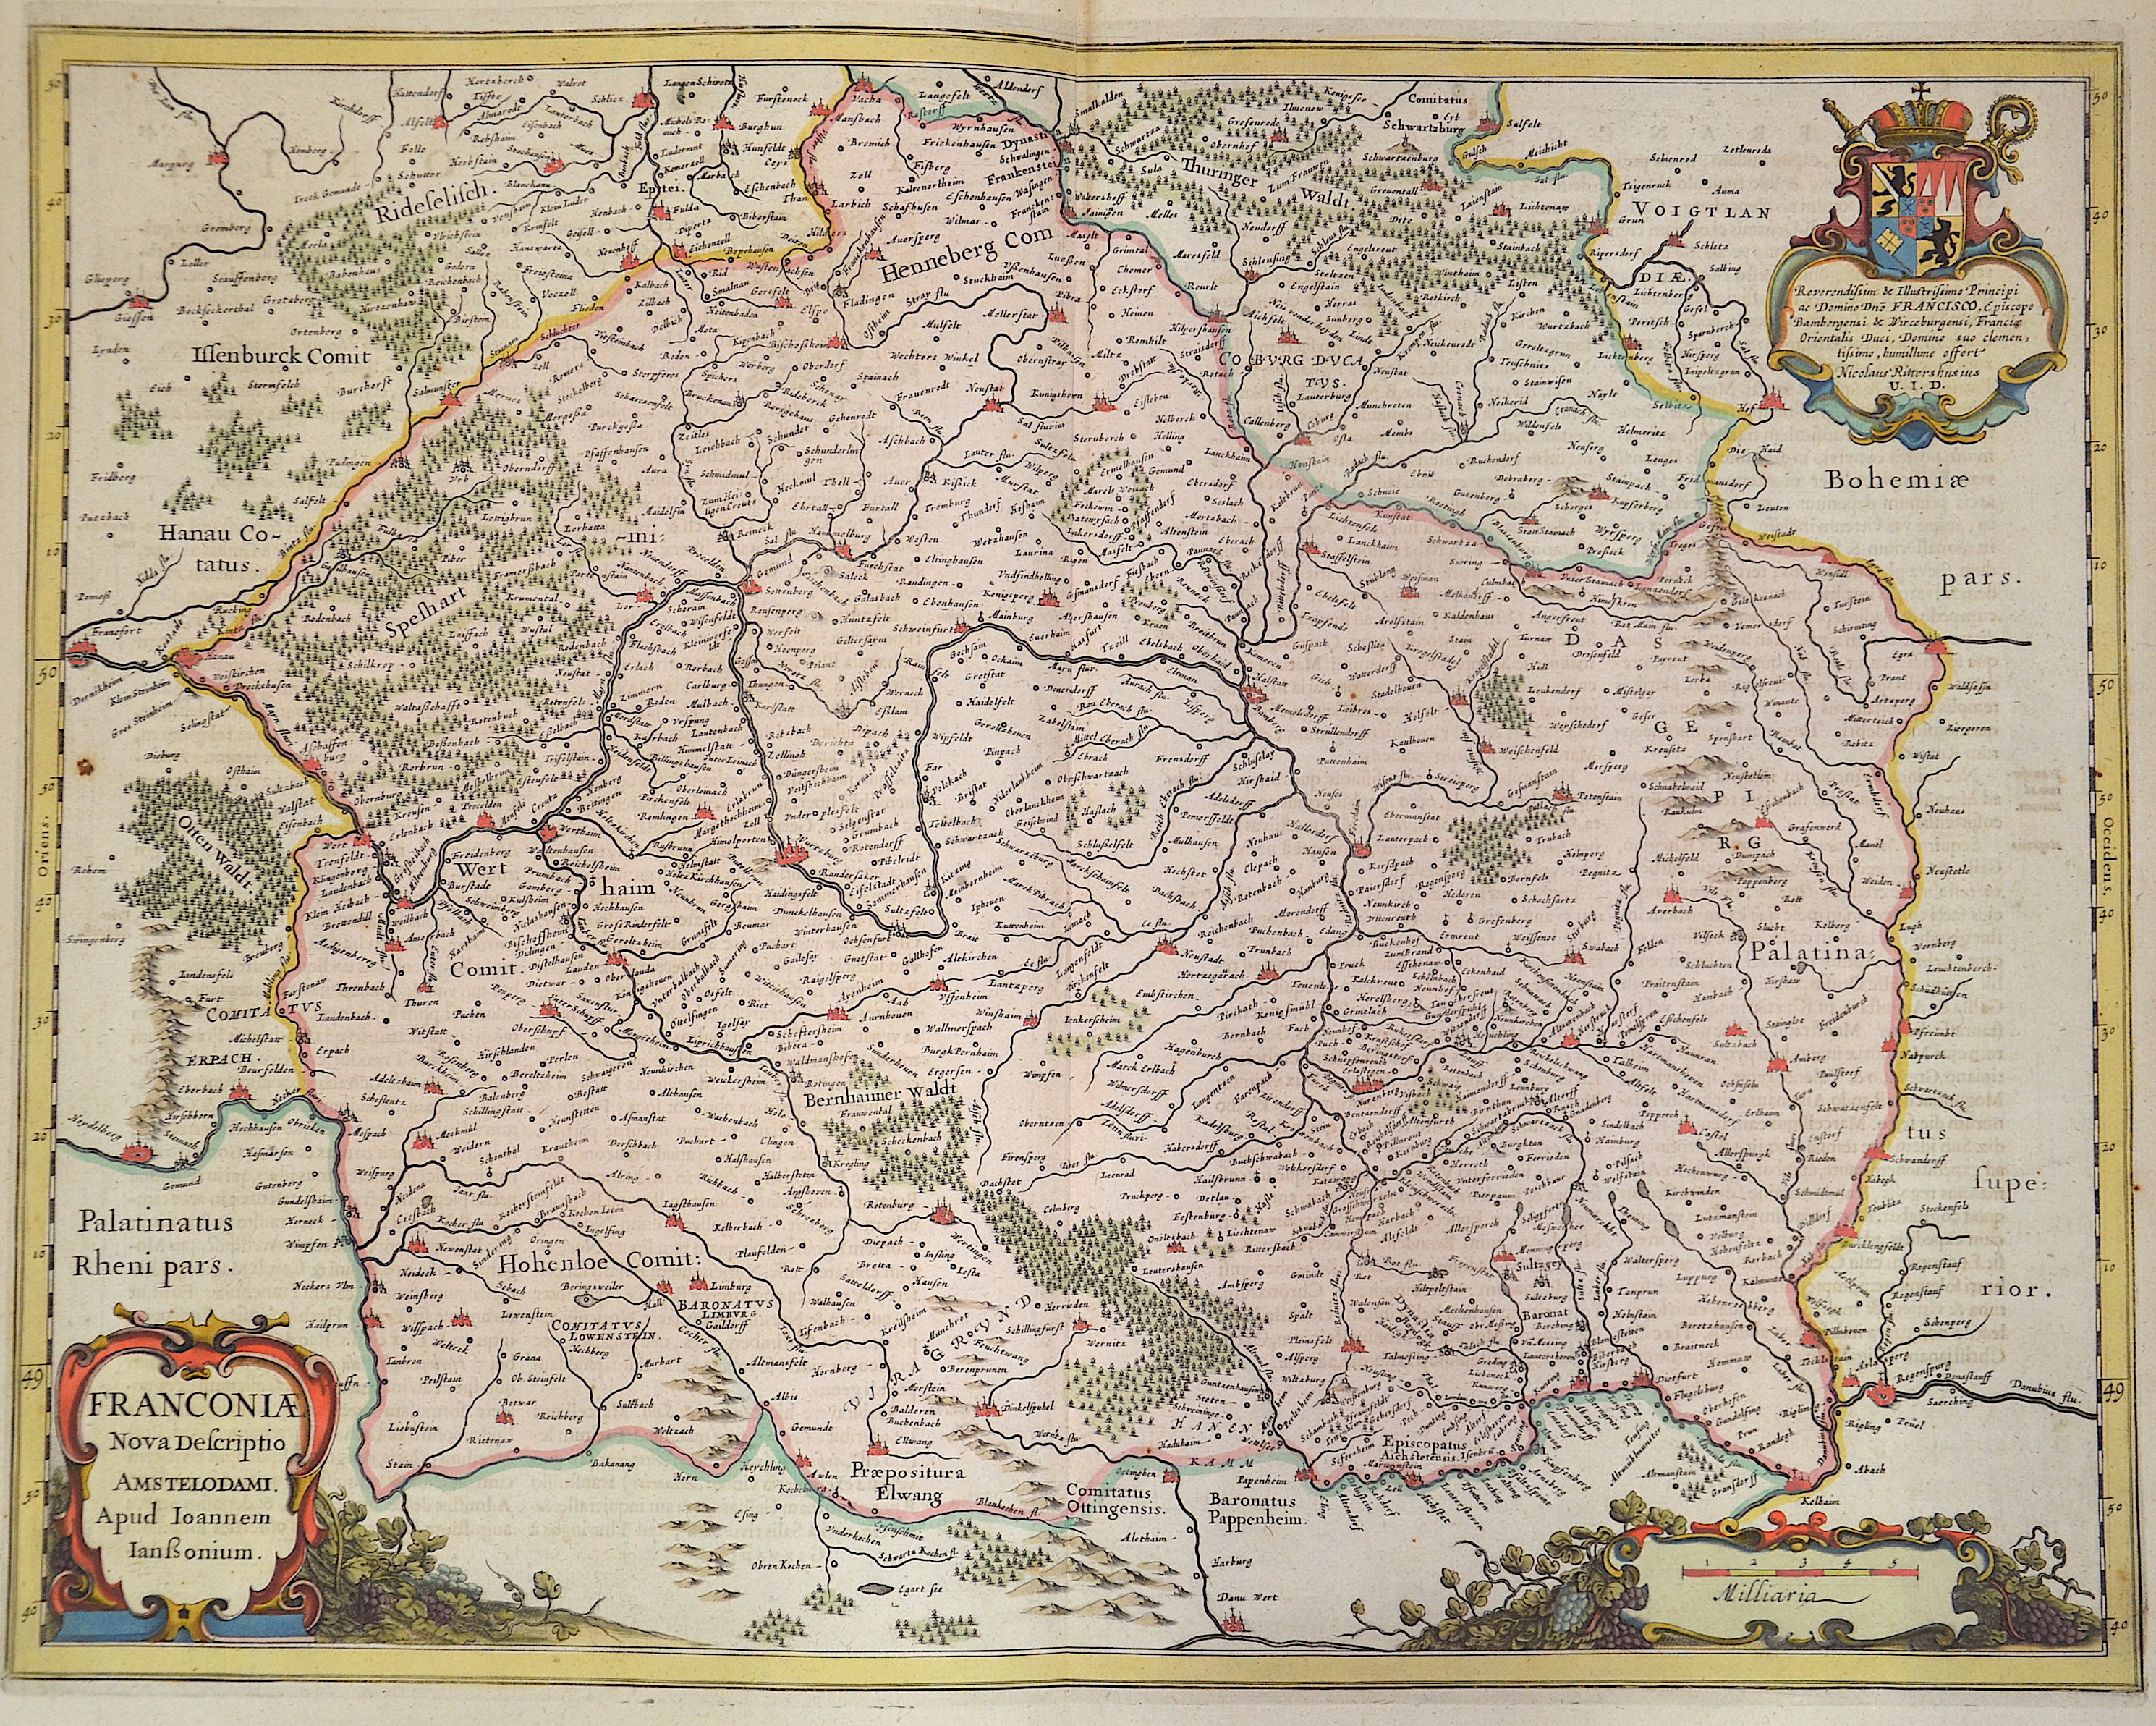 Janssonius/Mercator-Hondius, H. Johann Franconiae Nova Descriptio Amstelodami.